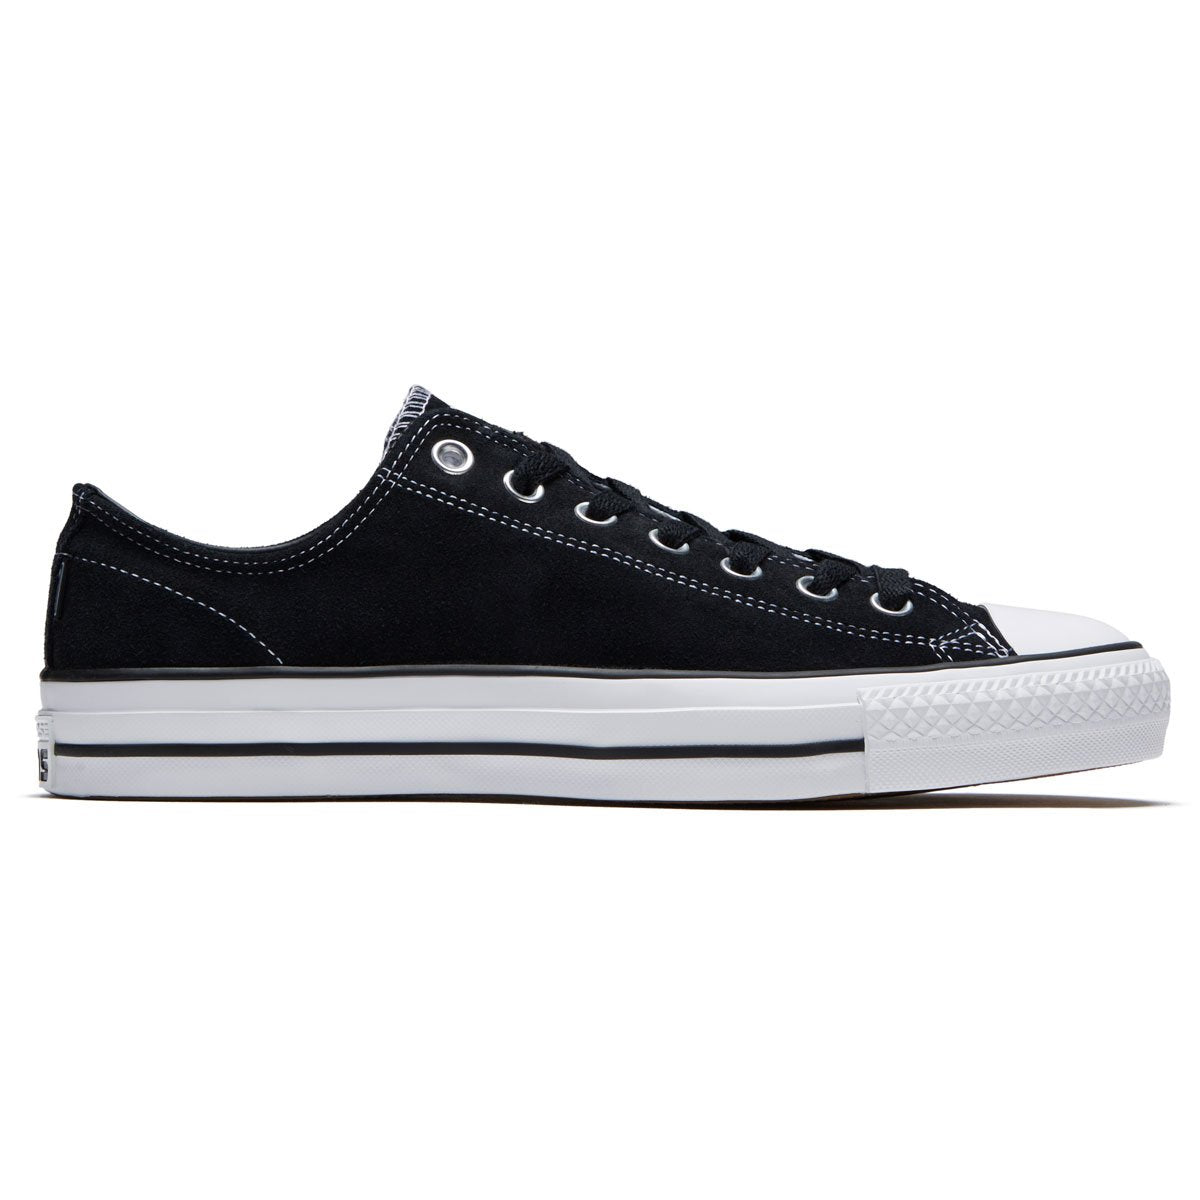 Converse Taylor All Star Pro Ox Shoes Black/Black/White CCS